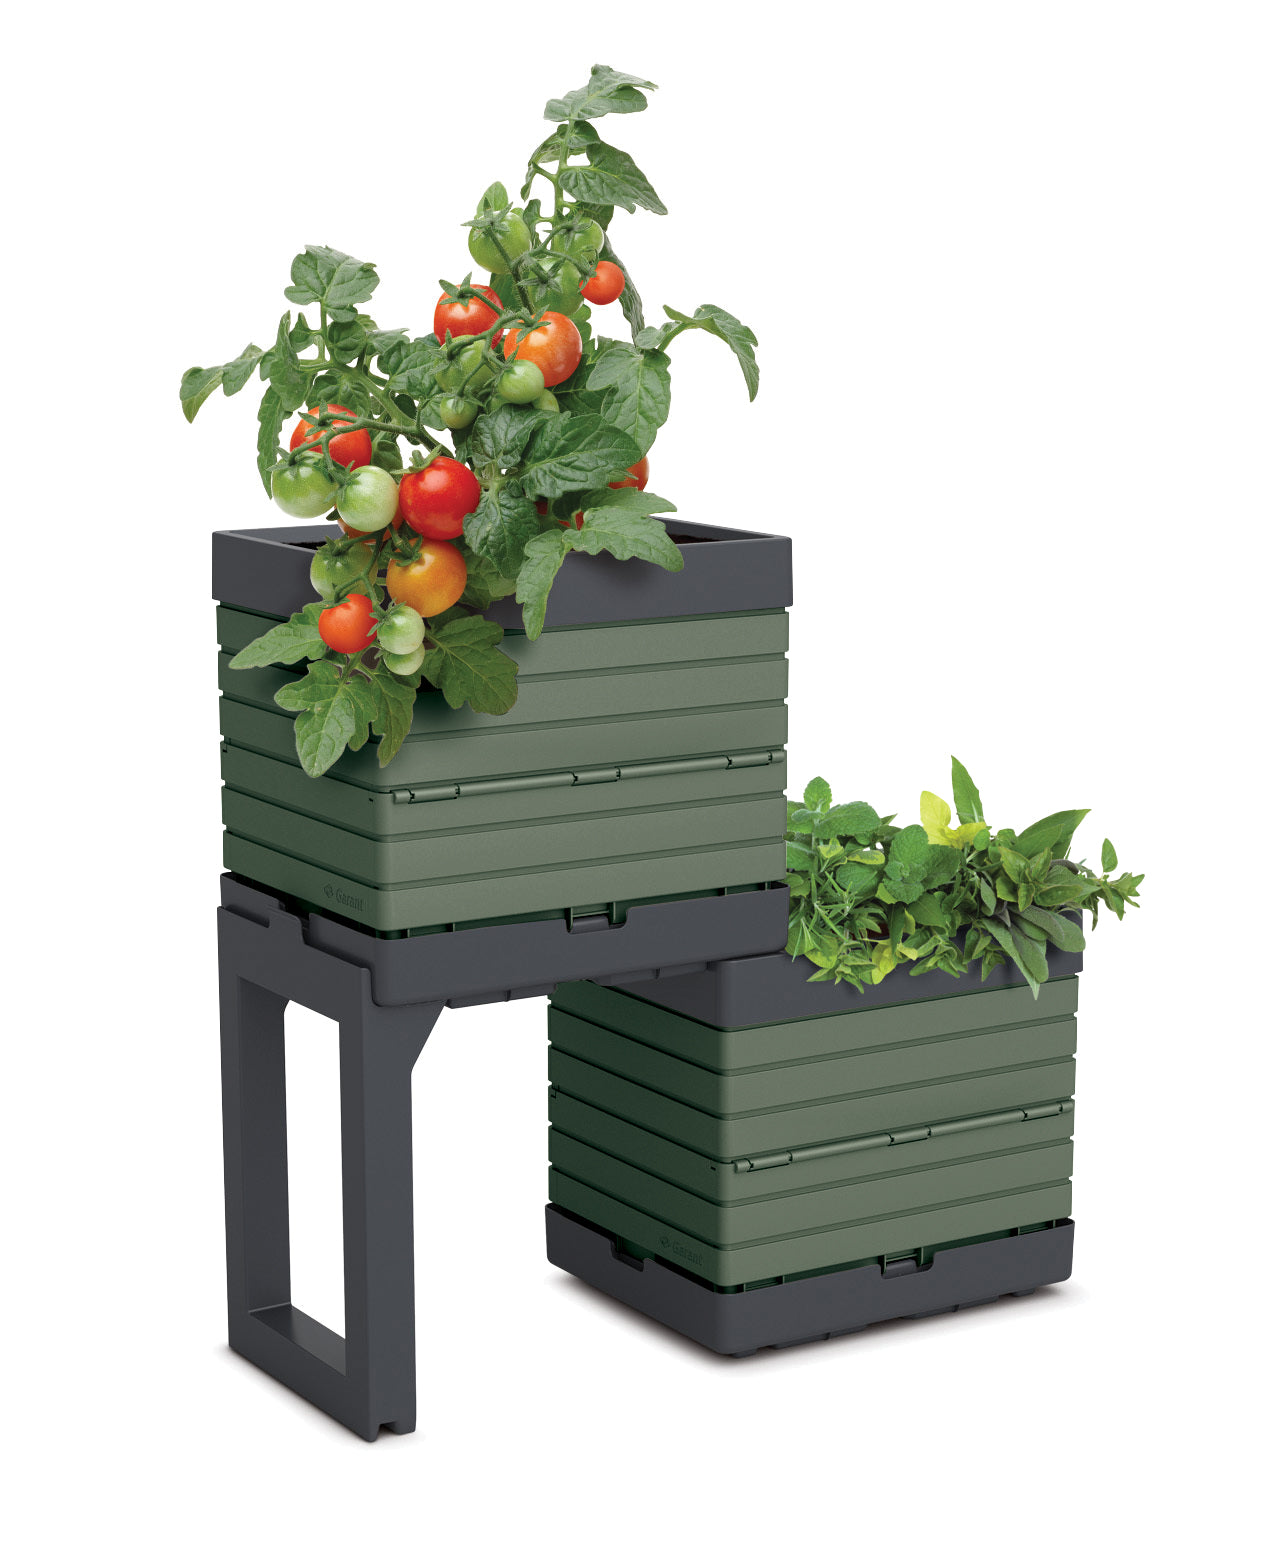 Individual bin, 14x11x13", polypro green M3 modular garden